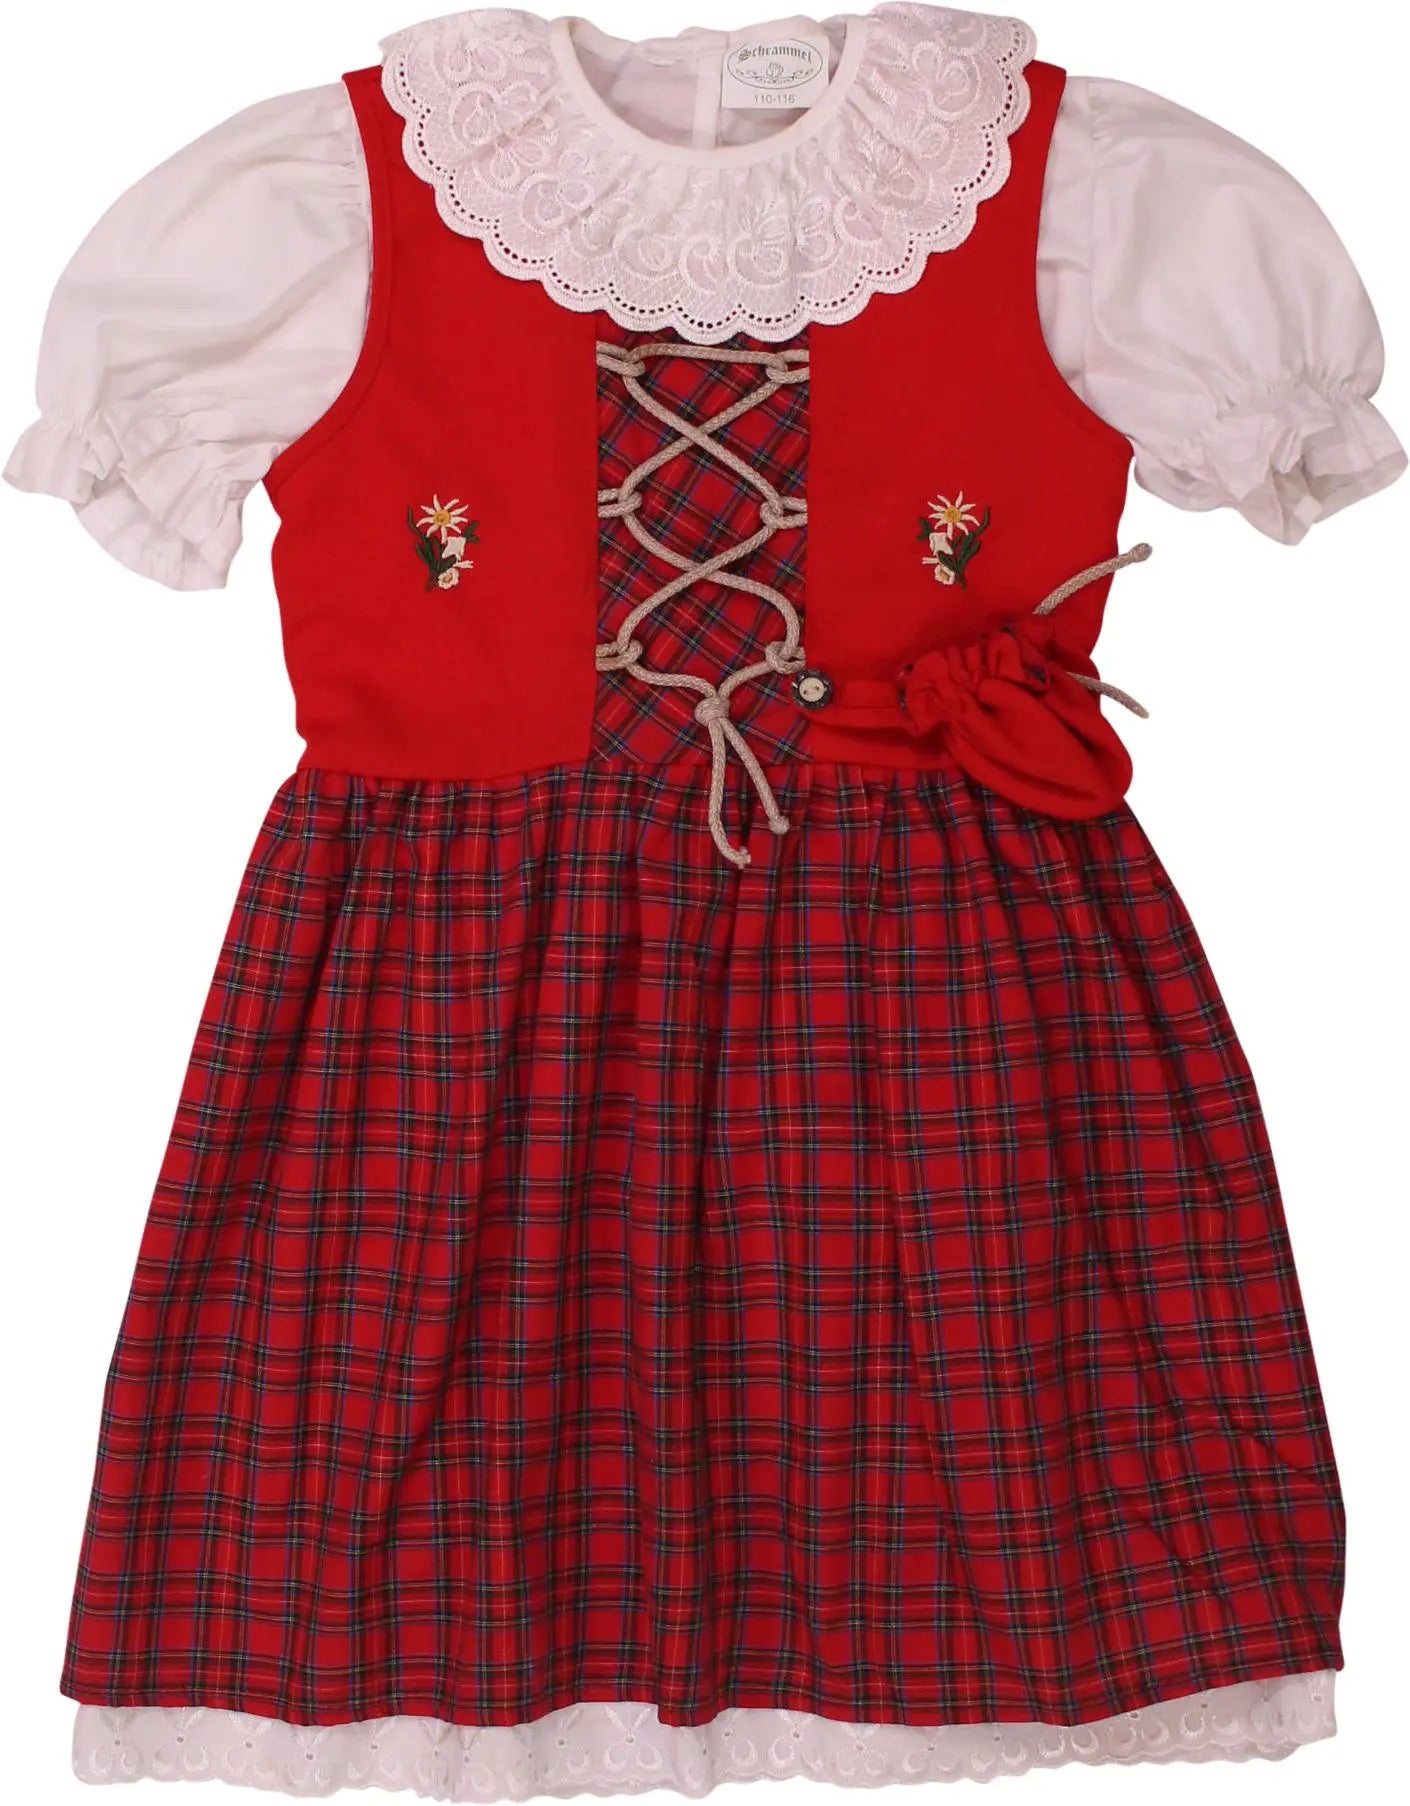 schrammel - Vintage Schrammel Dress- ThriftTale.com - Vintage and second handclothing